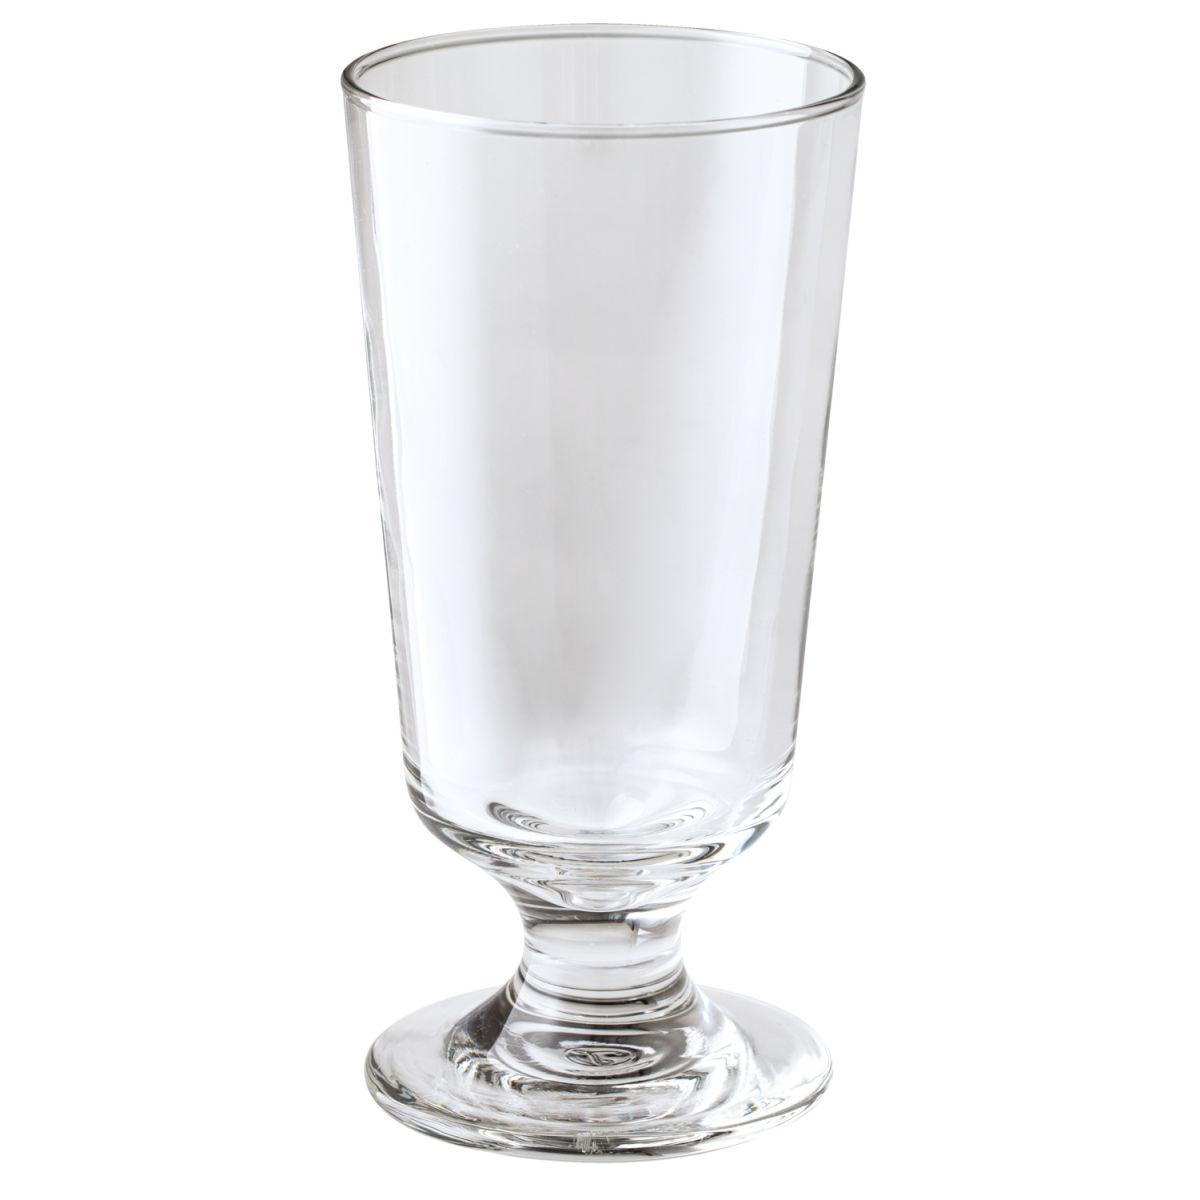 Royal leerdam Dessertglas Aruba; 296ml, 7.3x15.2 cm (ØxH); transparant; 12 stuk / verpakking